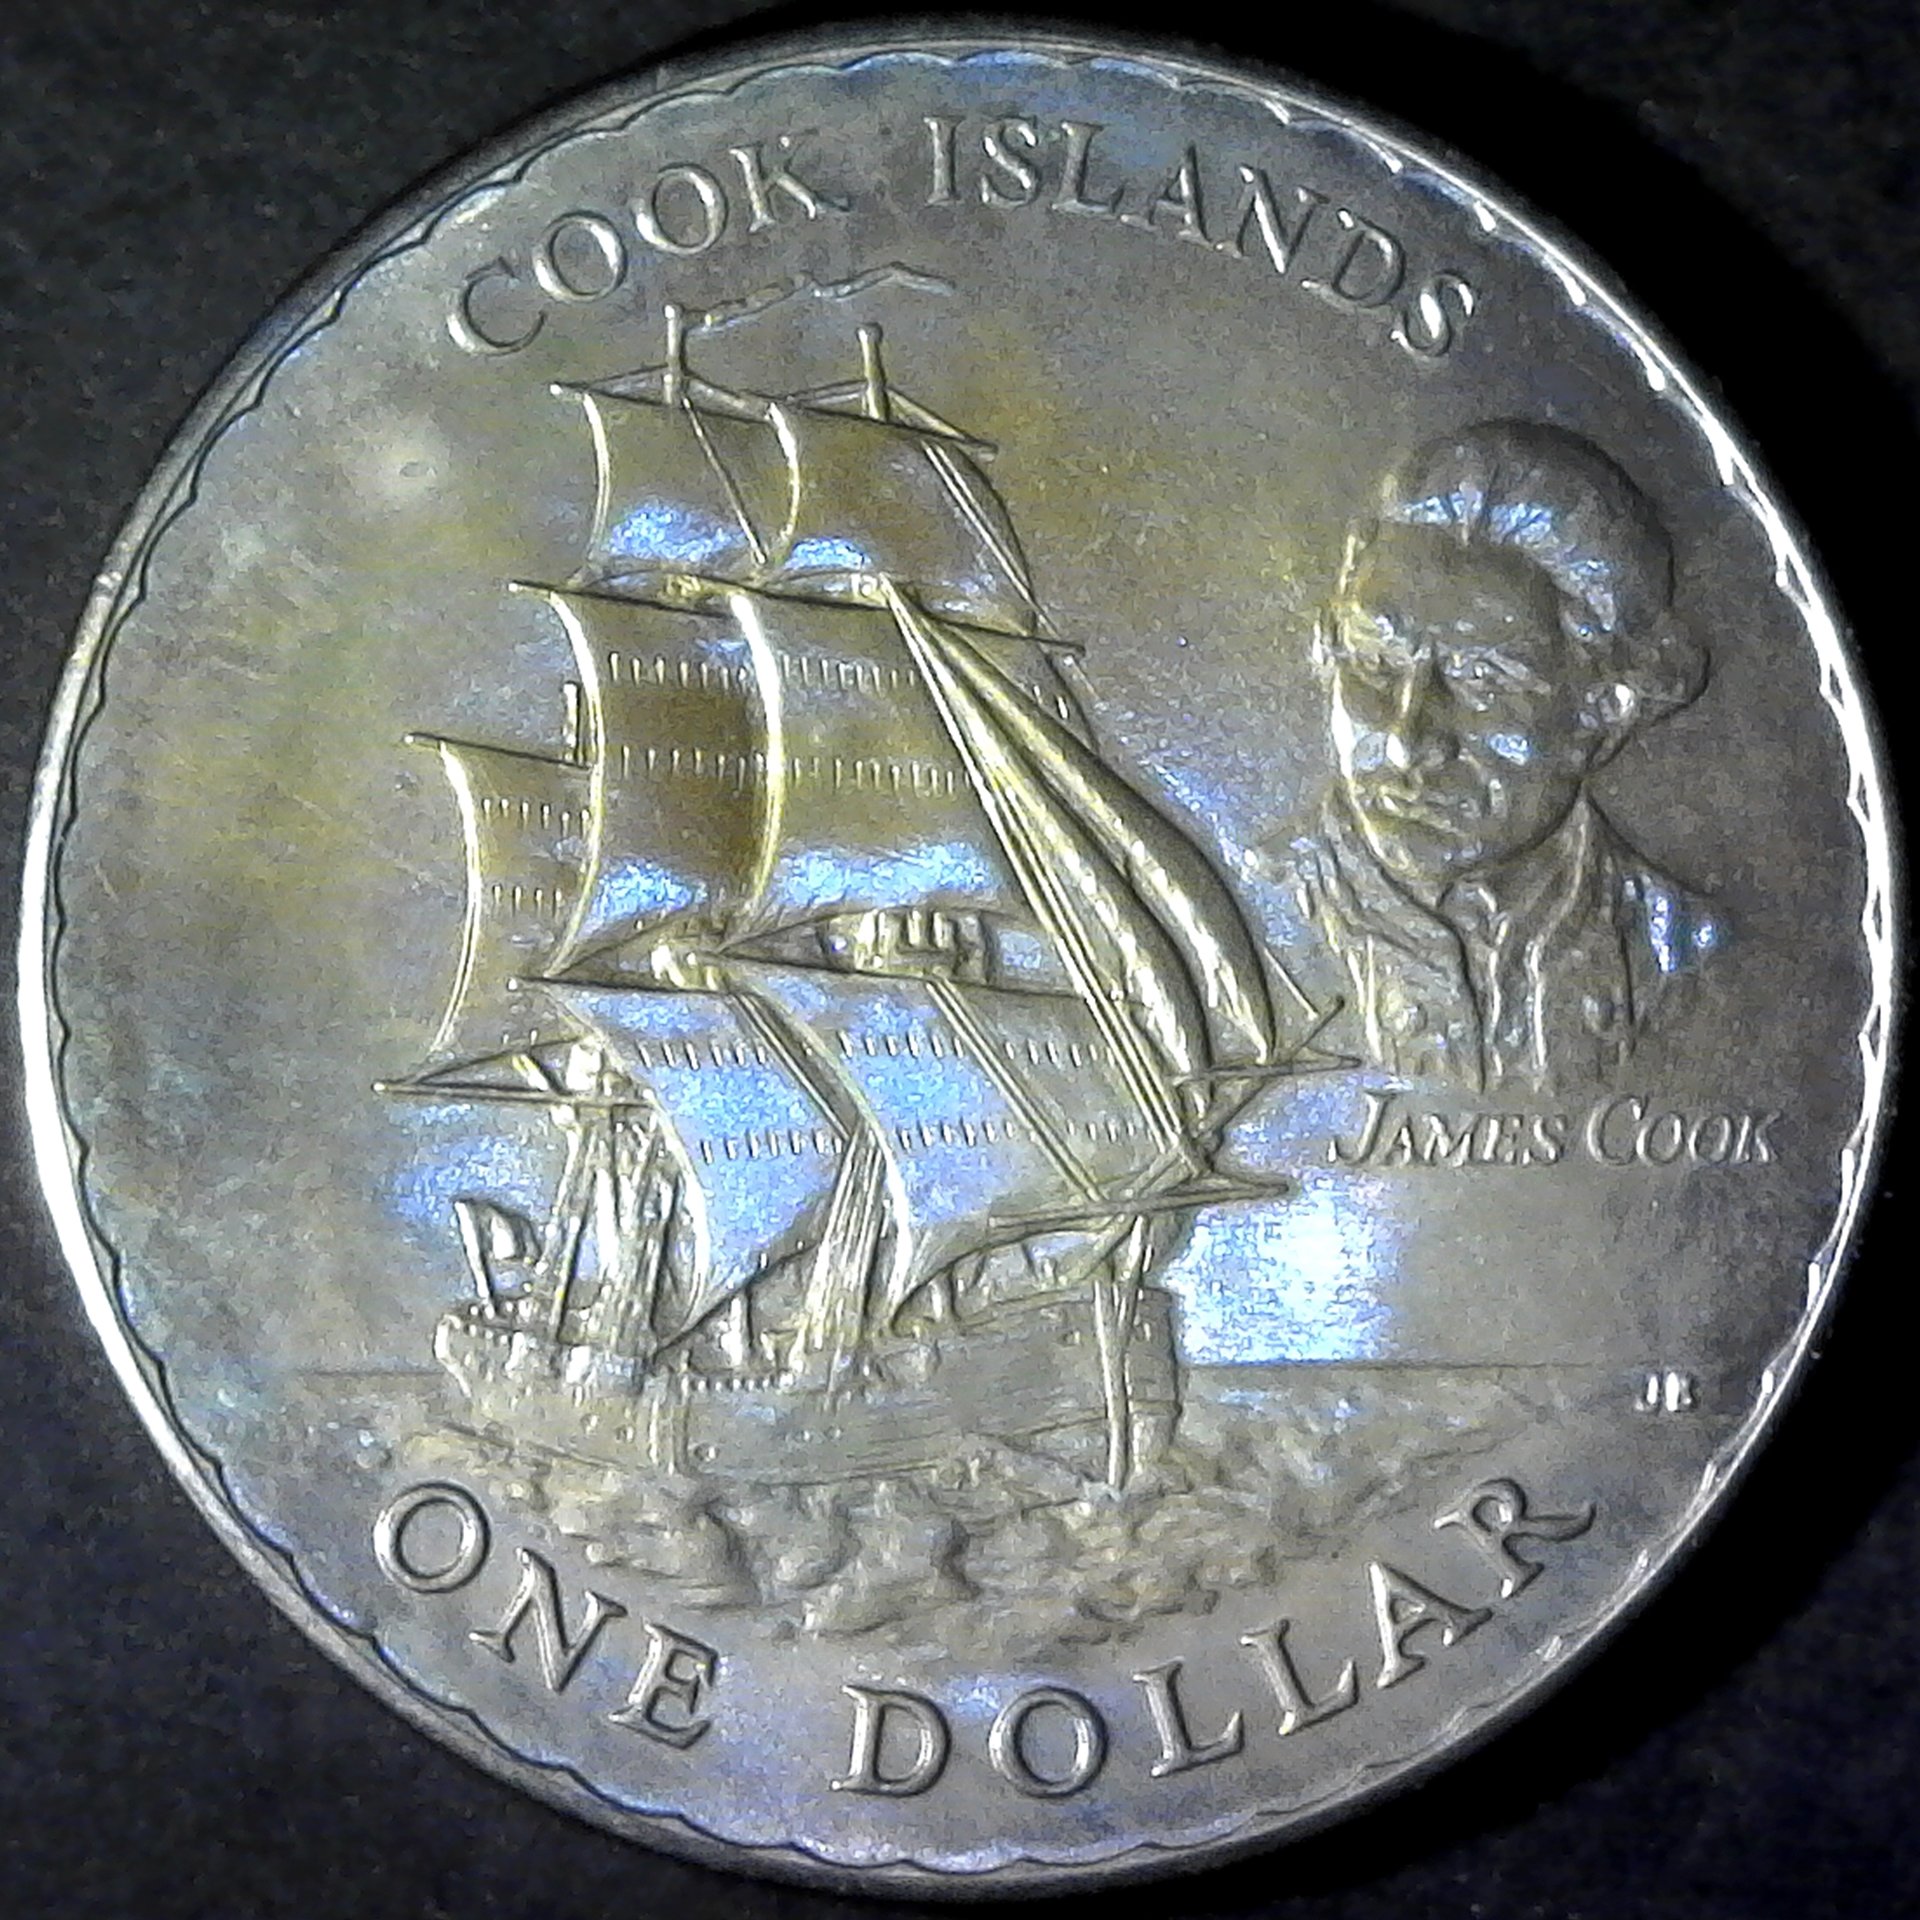 New Zealand One Dollar 1970 rev.jpg